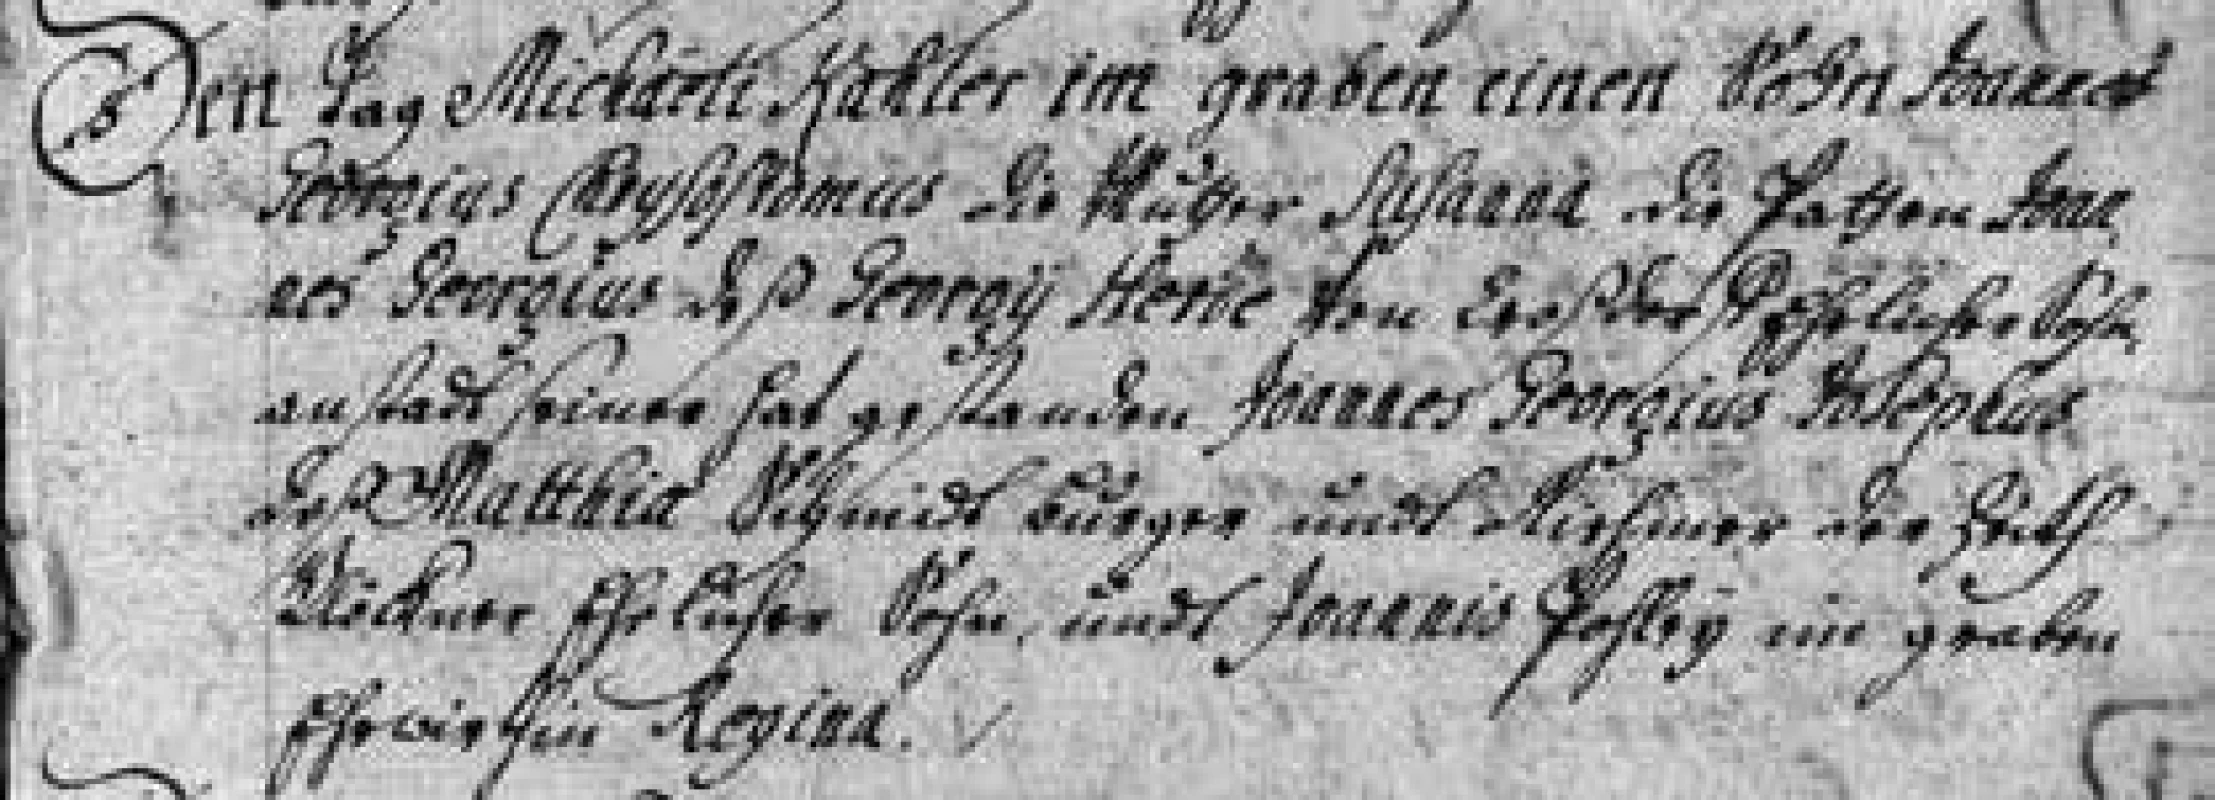 Zápis křtu Josefova děda Johanna Georga
Chrysostoma Kahlera (1731)